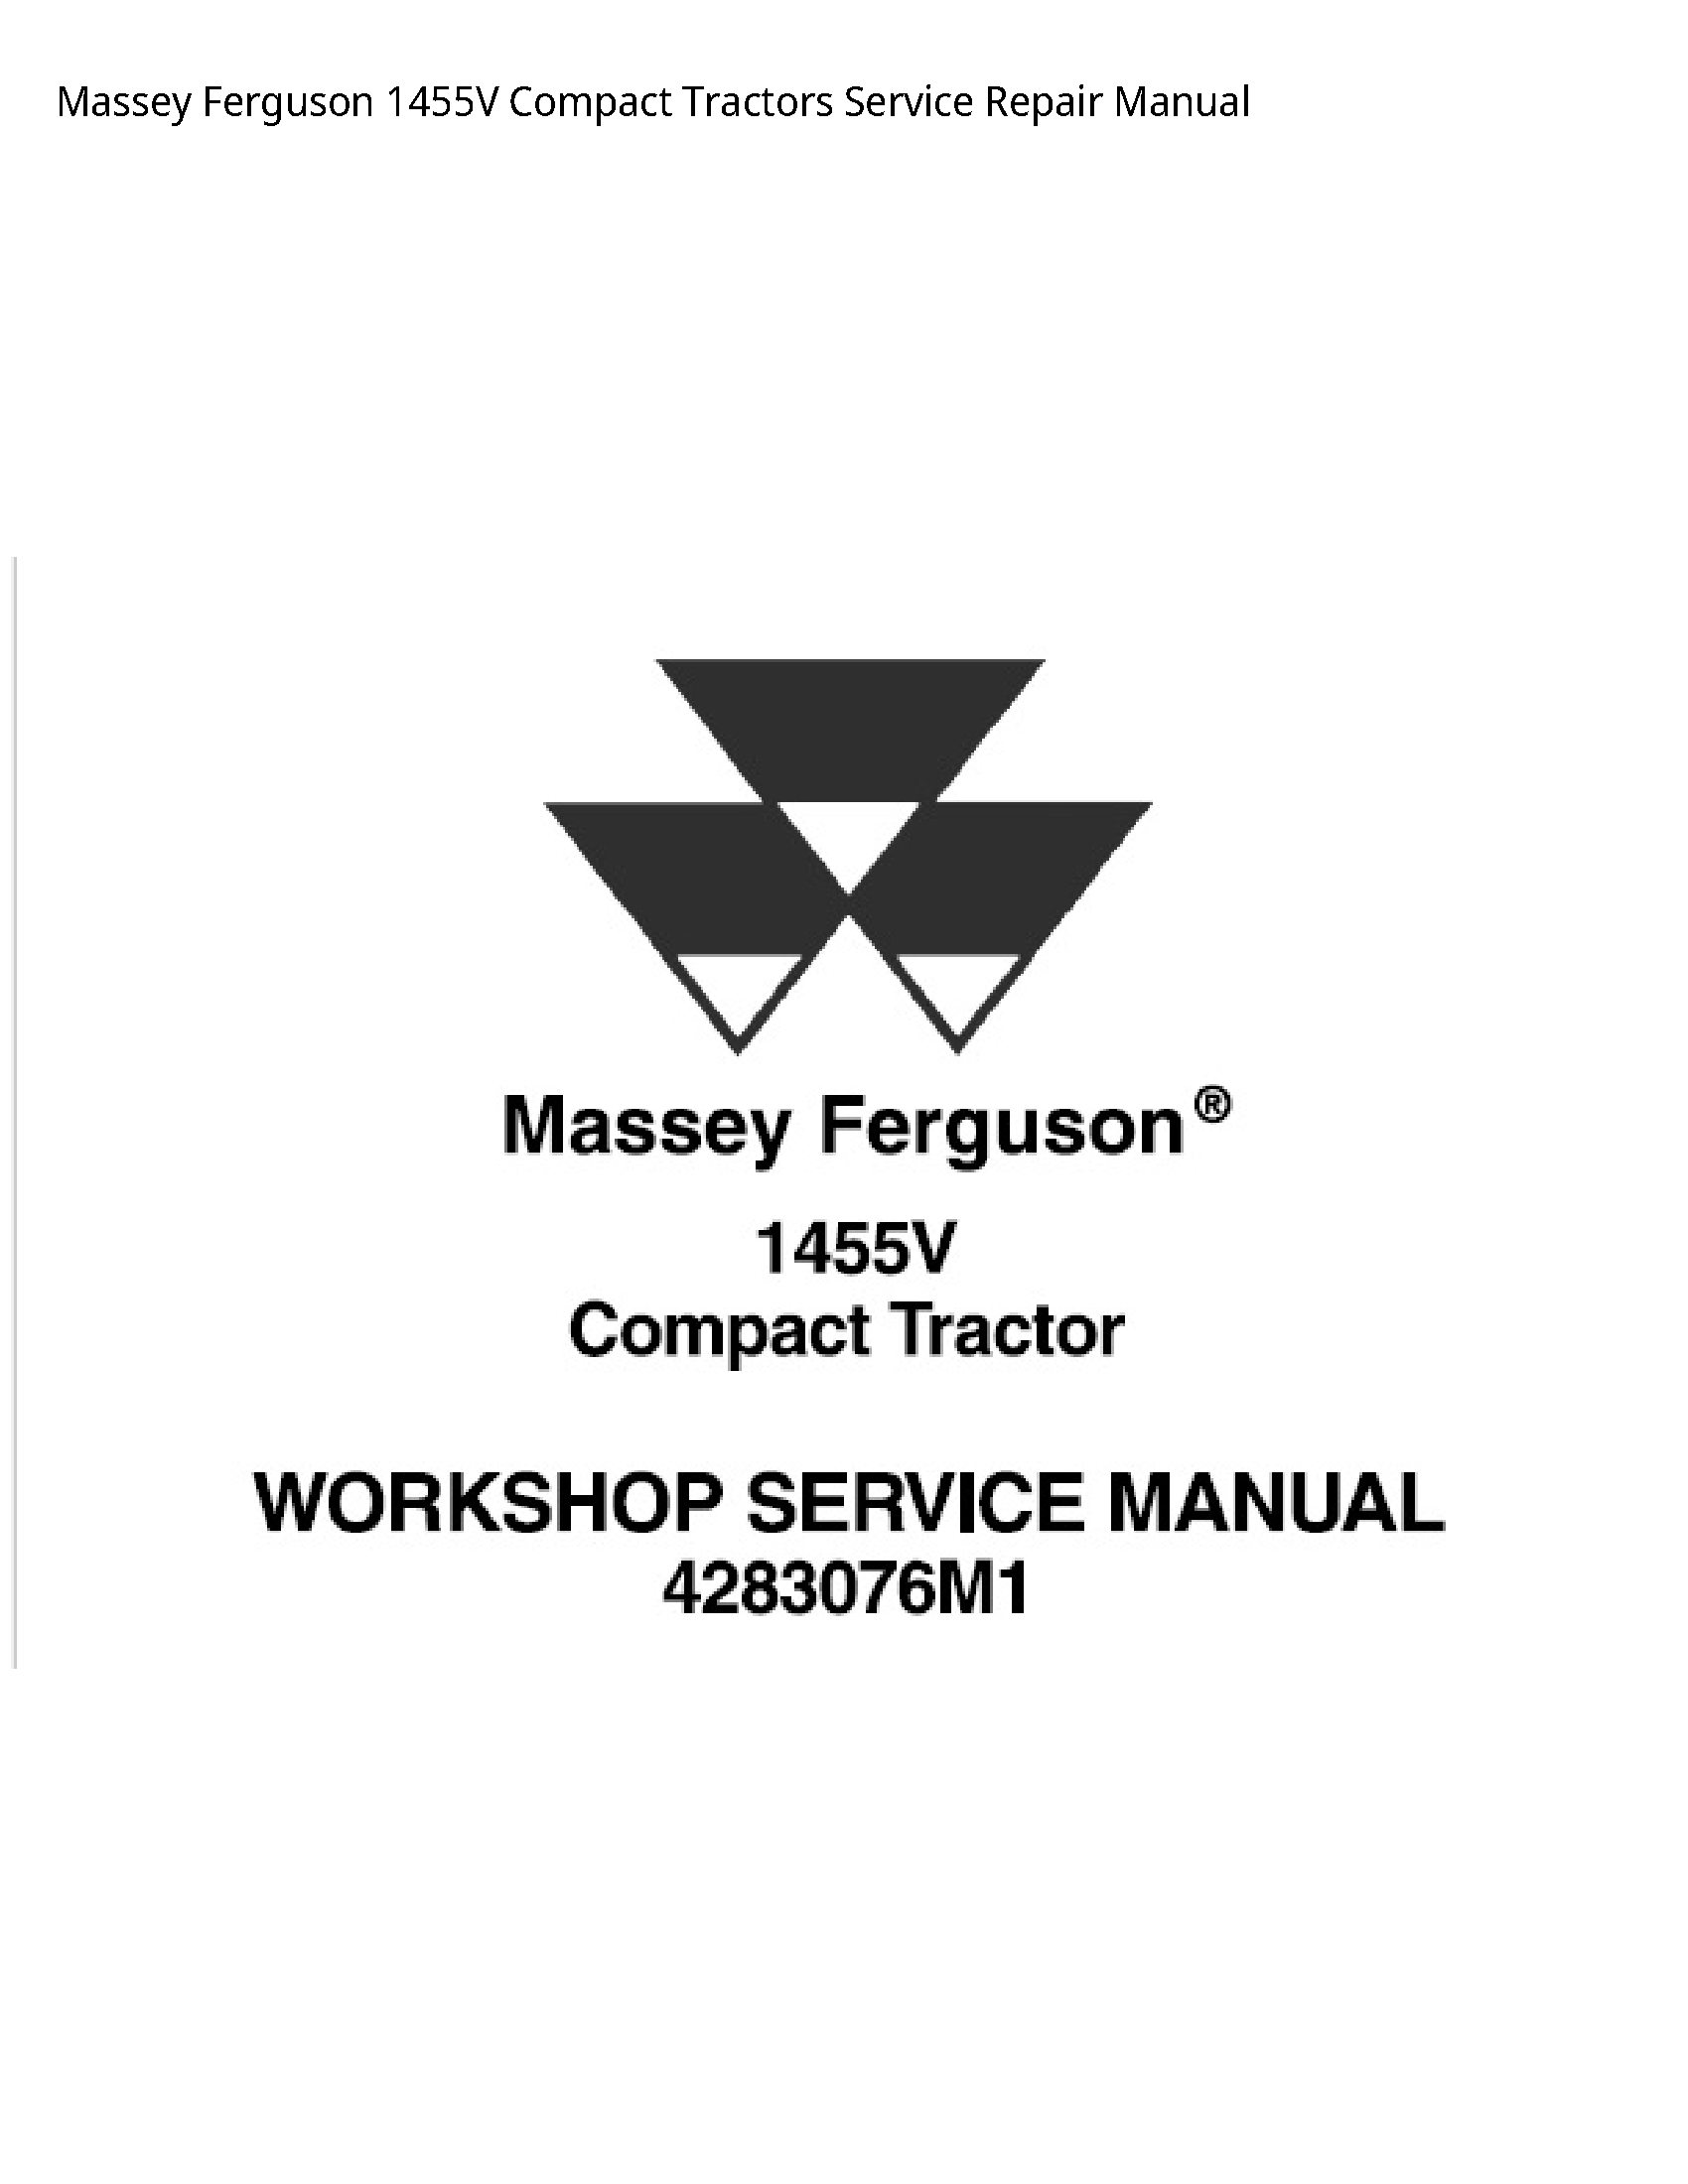 Massey Ferguson 1455V Compact Tractors manual